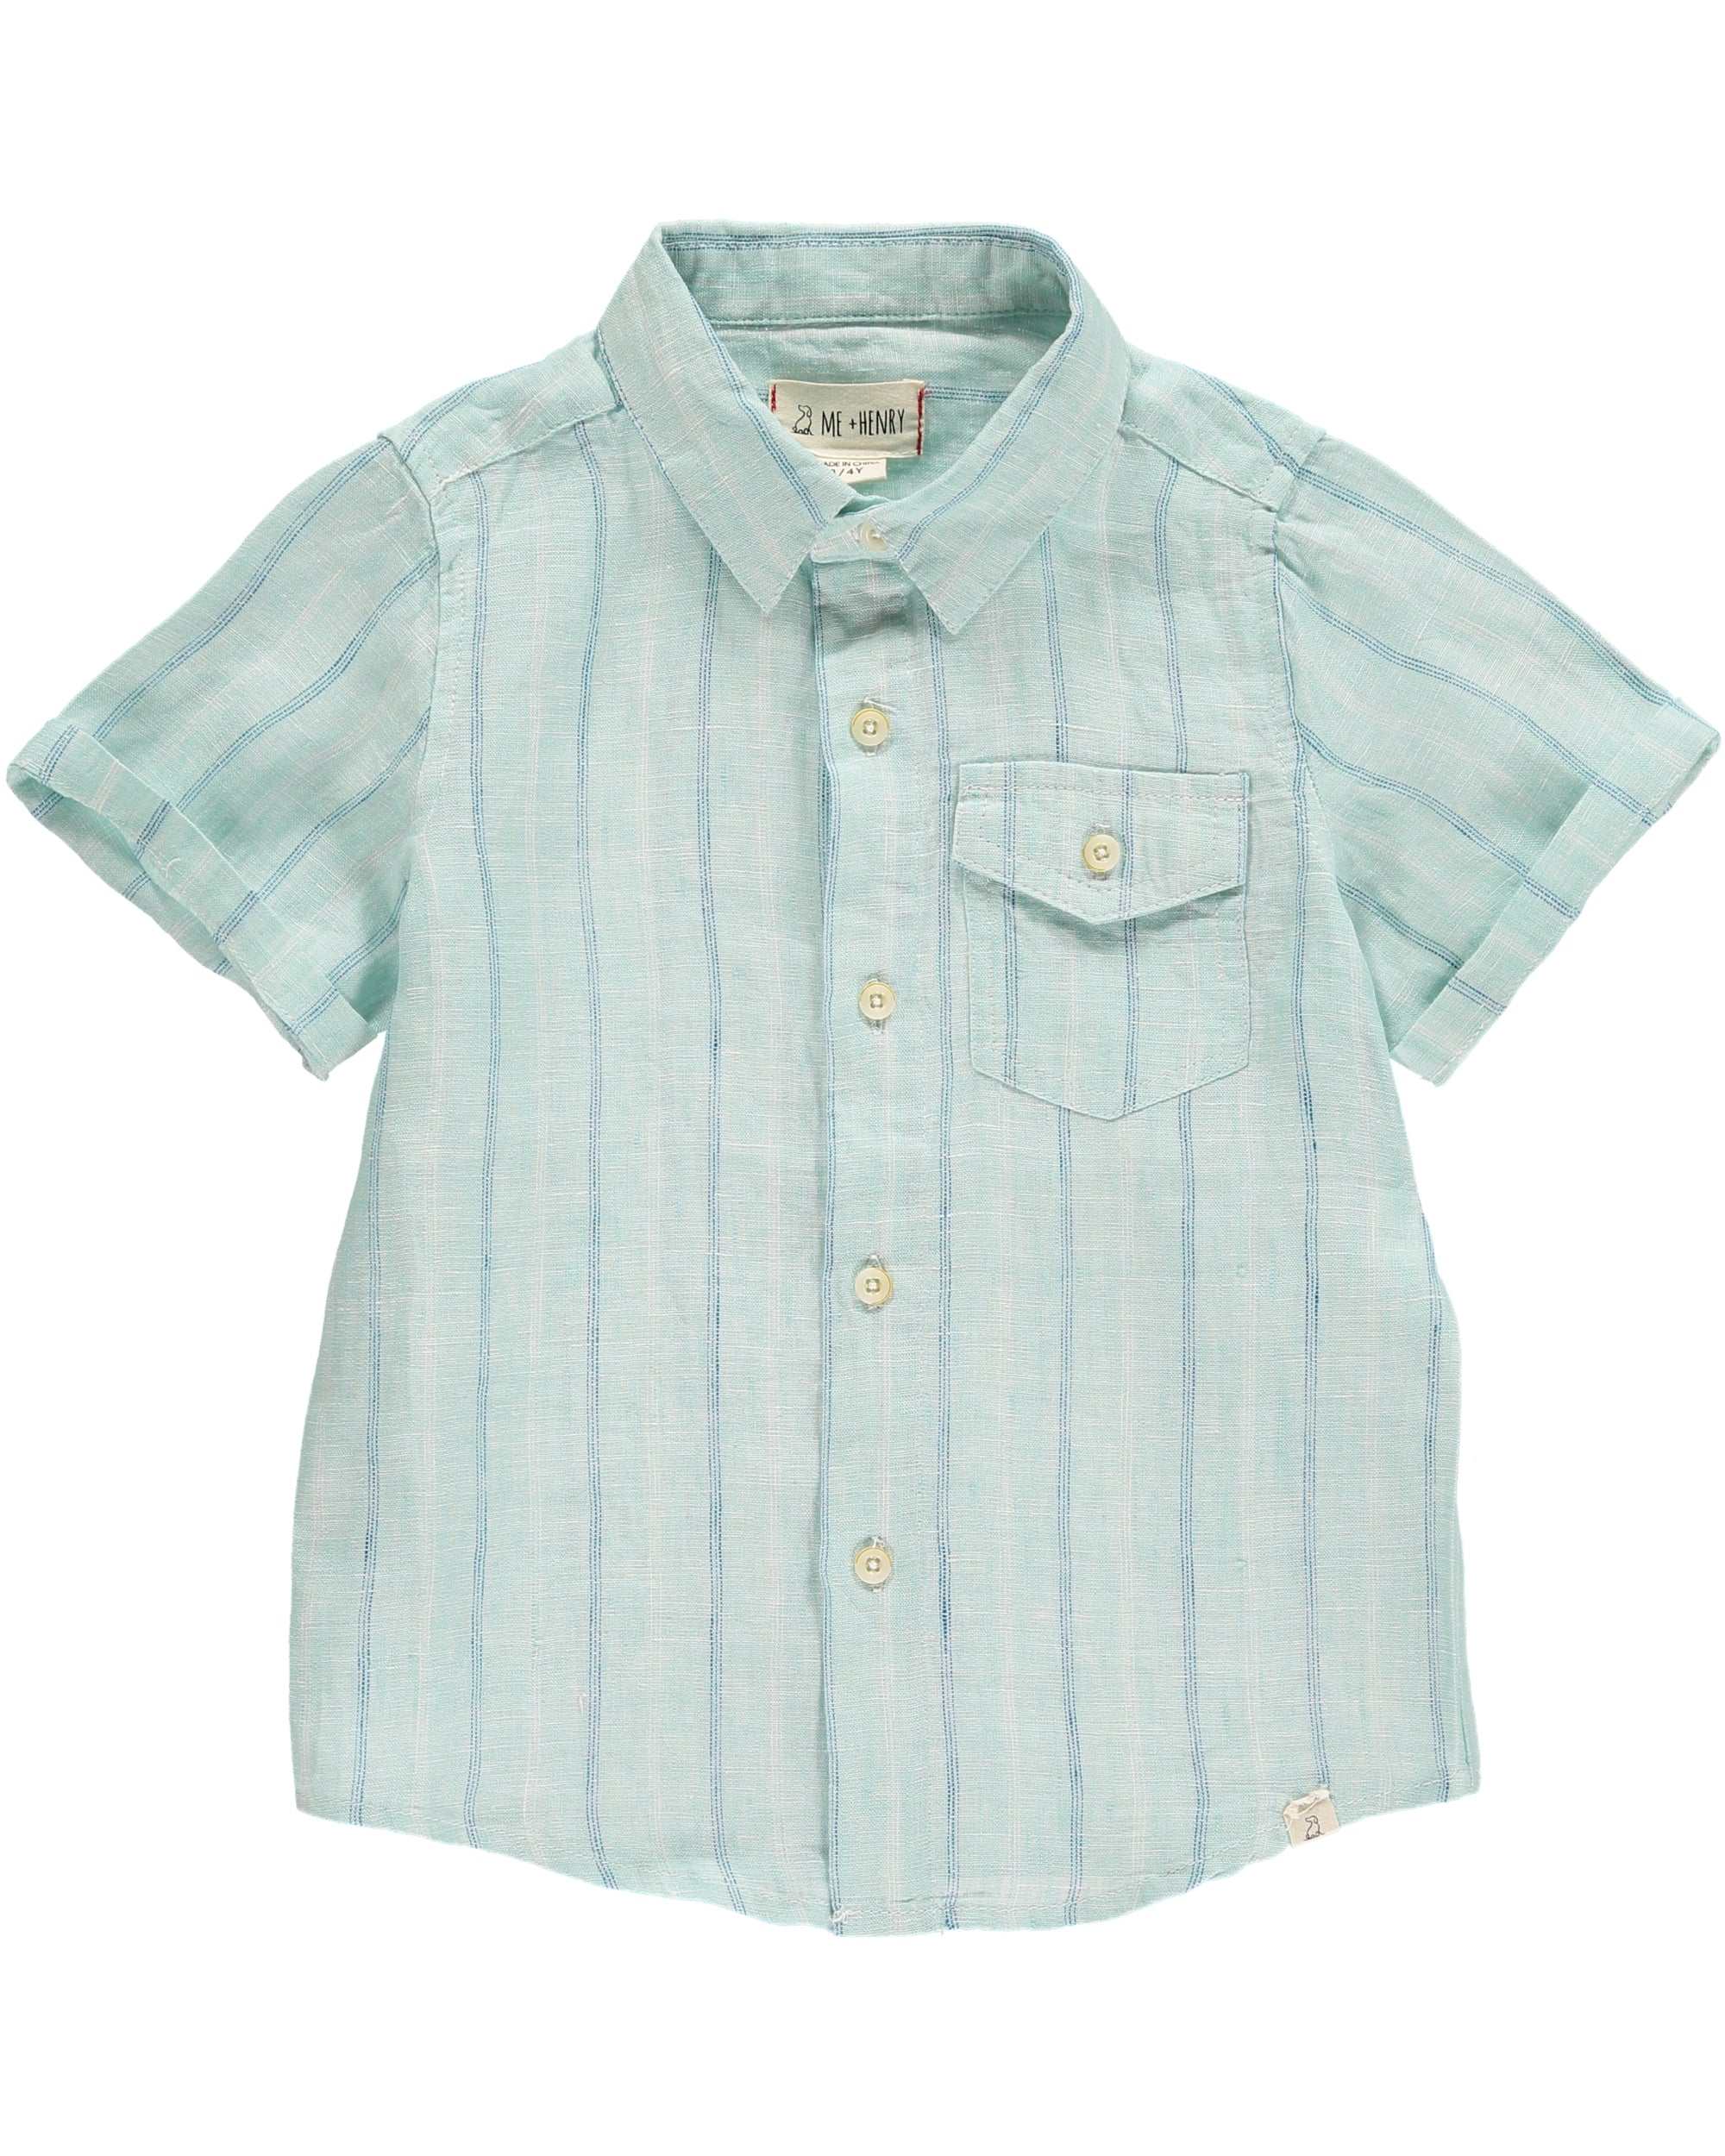 Sonoma Boys Kids Green Navy striped short sleeve tee shirt Size XL 7X New